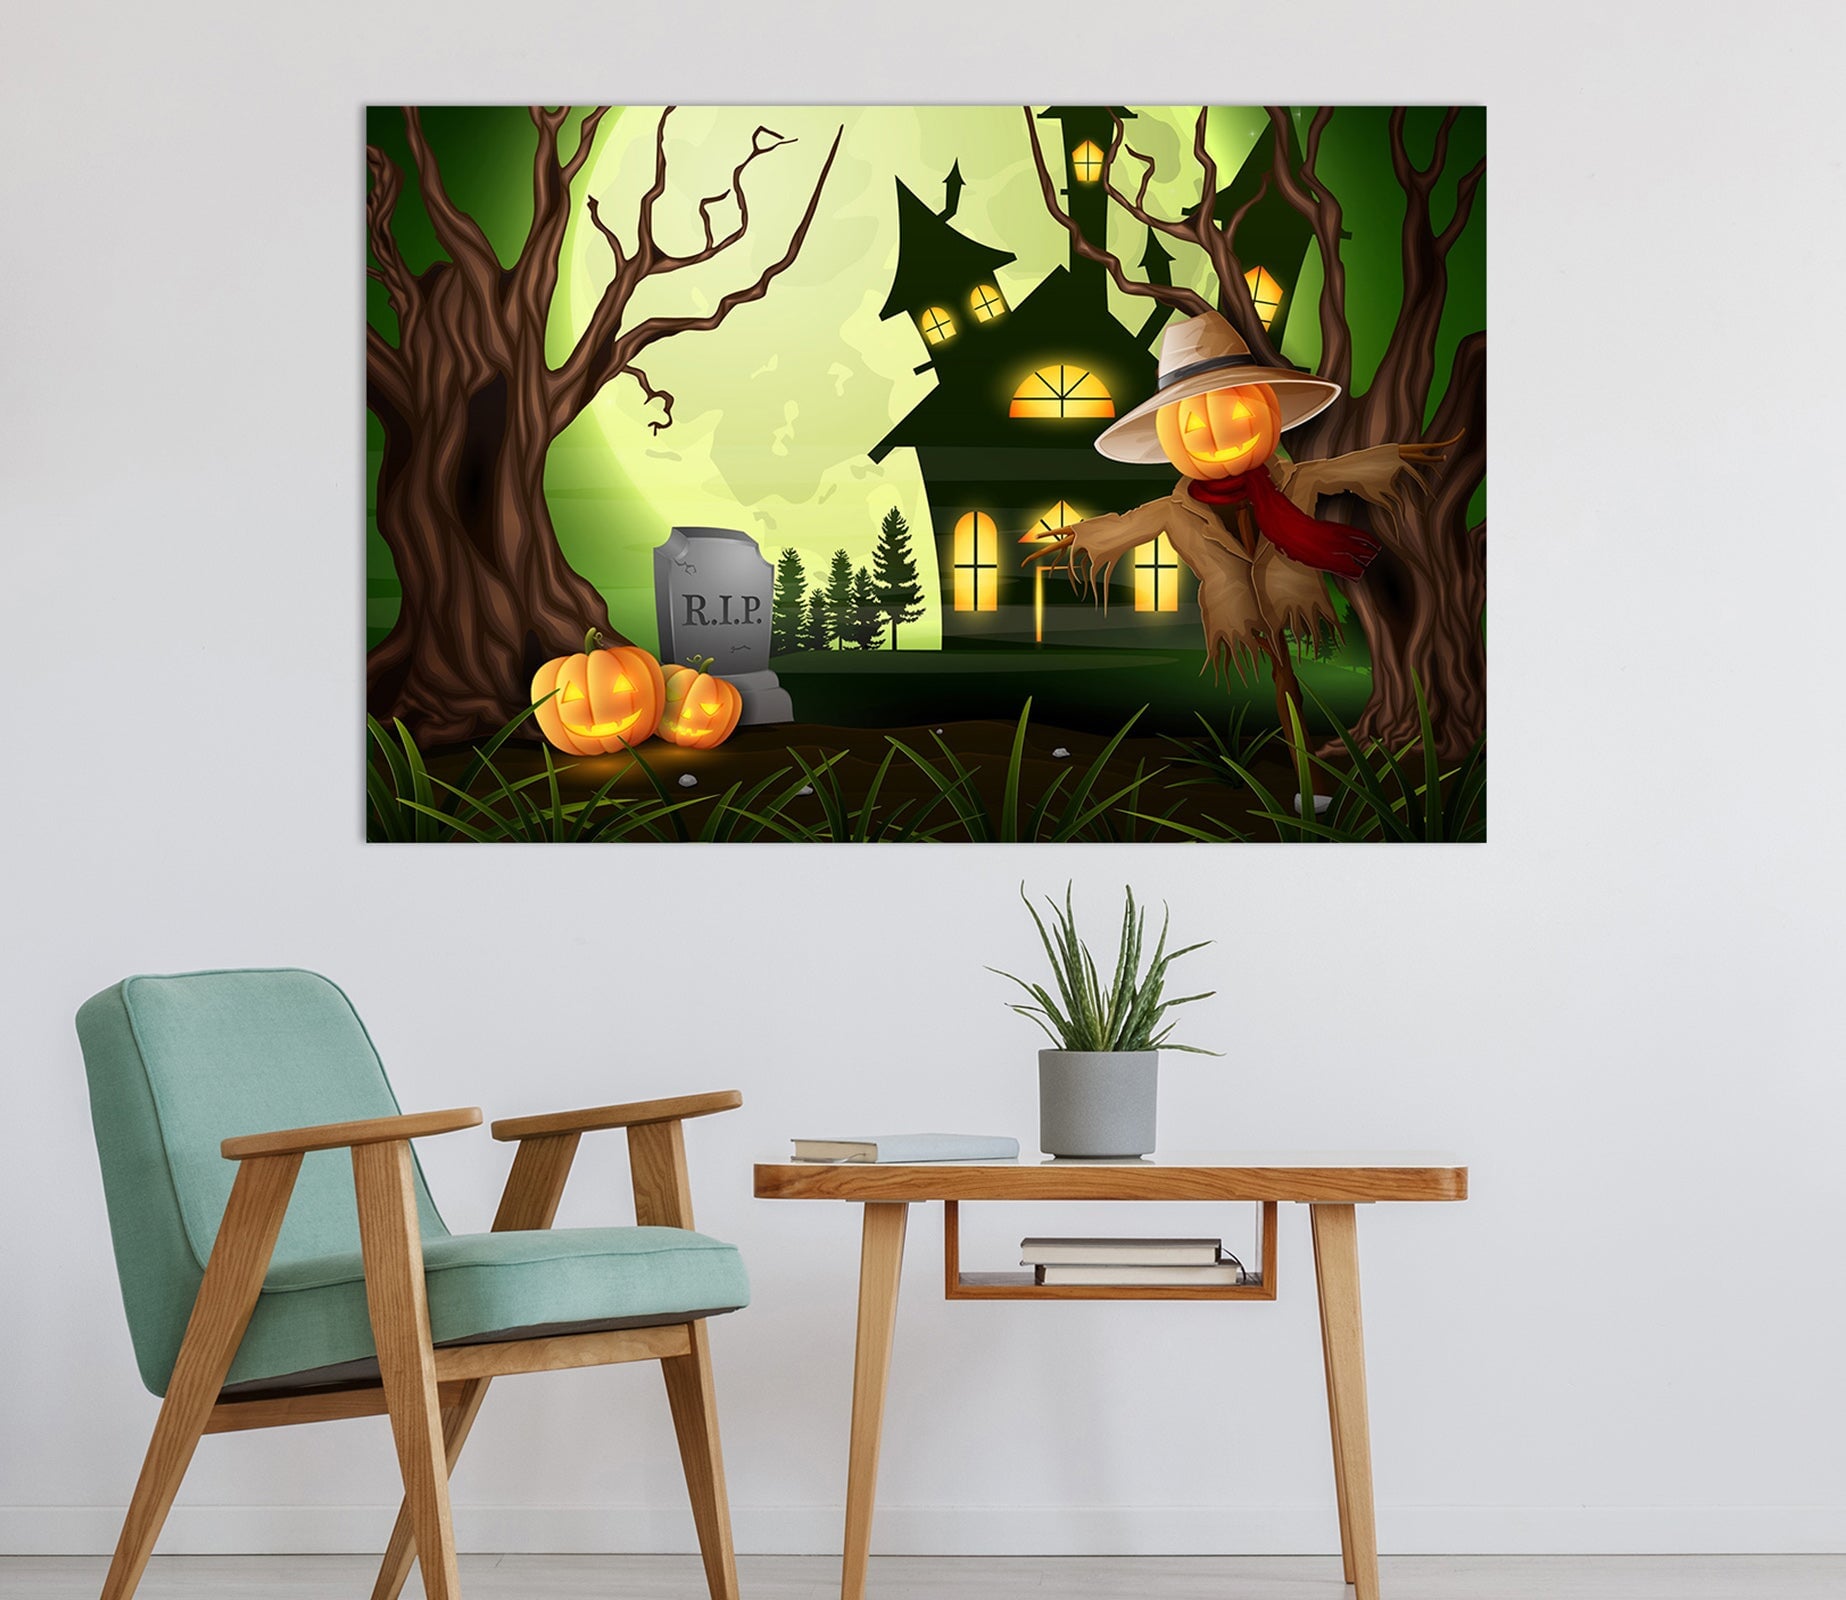 3D Haunted House Pumpkin 018 Halloween Wall Stickers Wallpaper AJ Wallpaper 2 